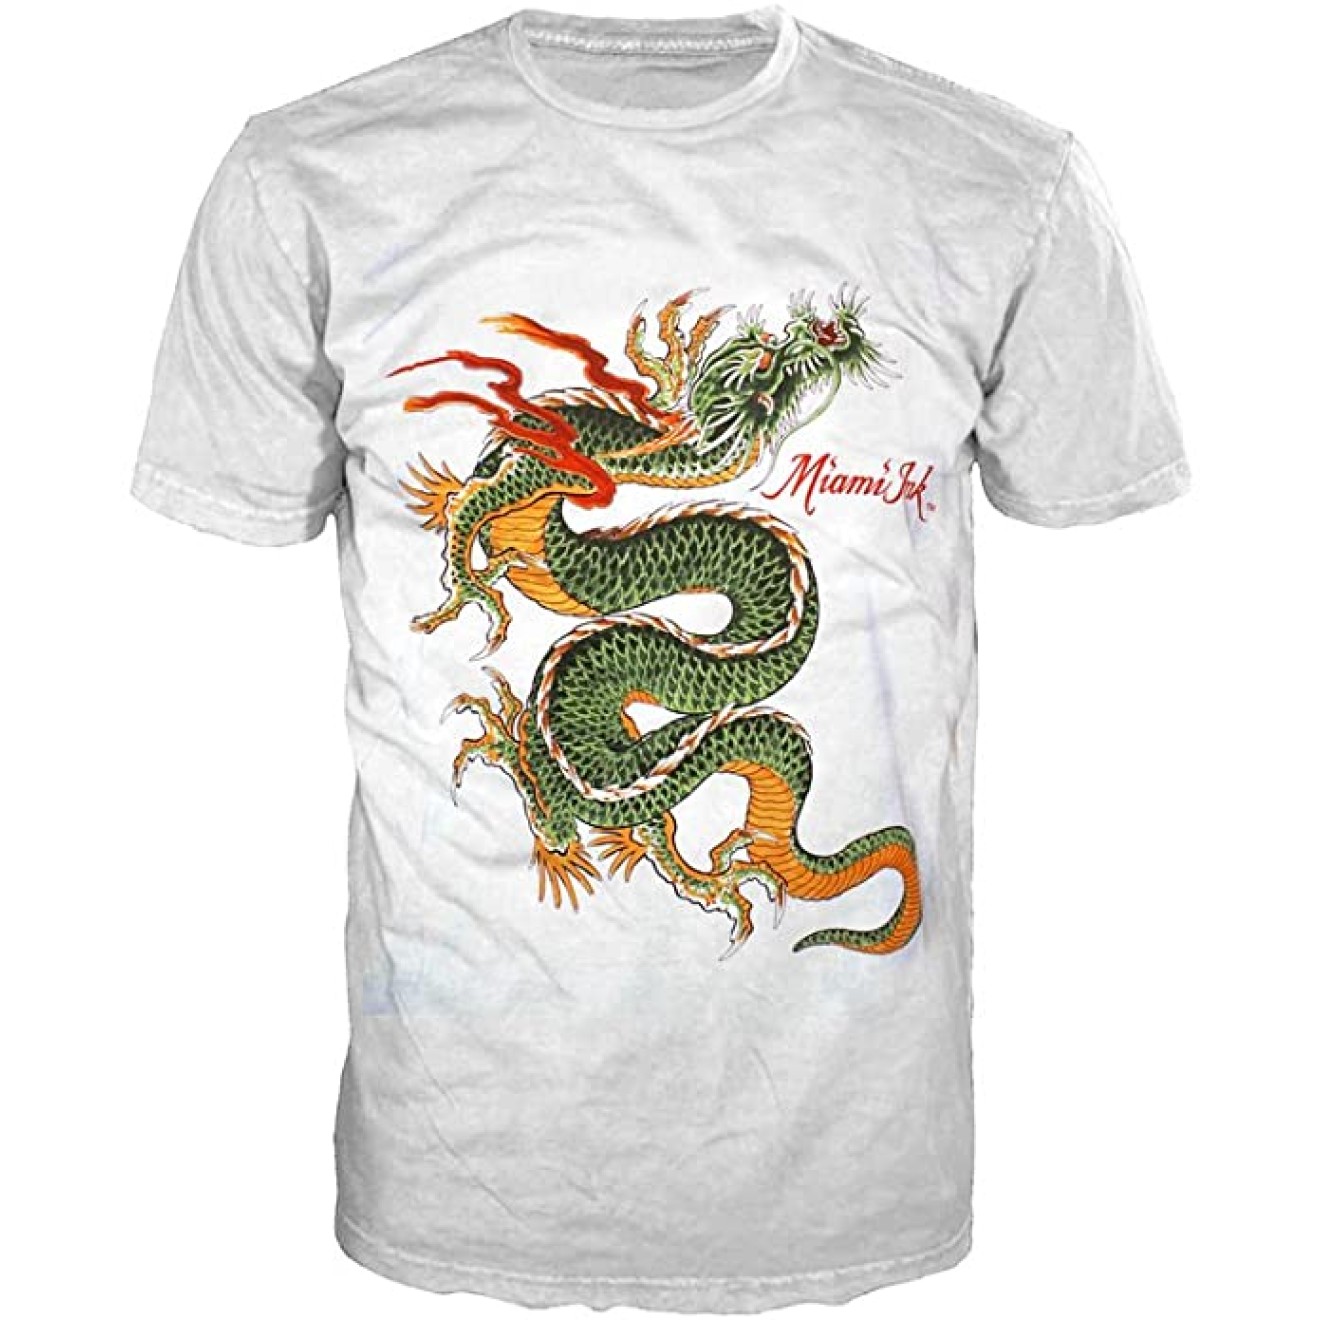 Miami Ink Serpent T-Shirt Dragon tee